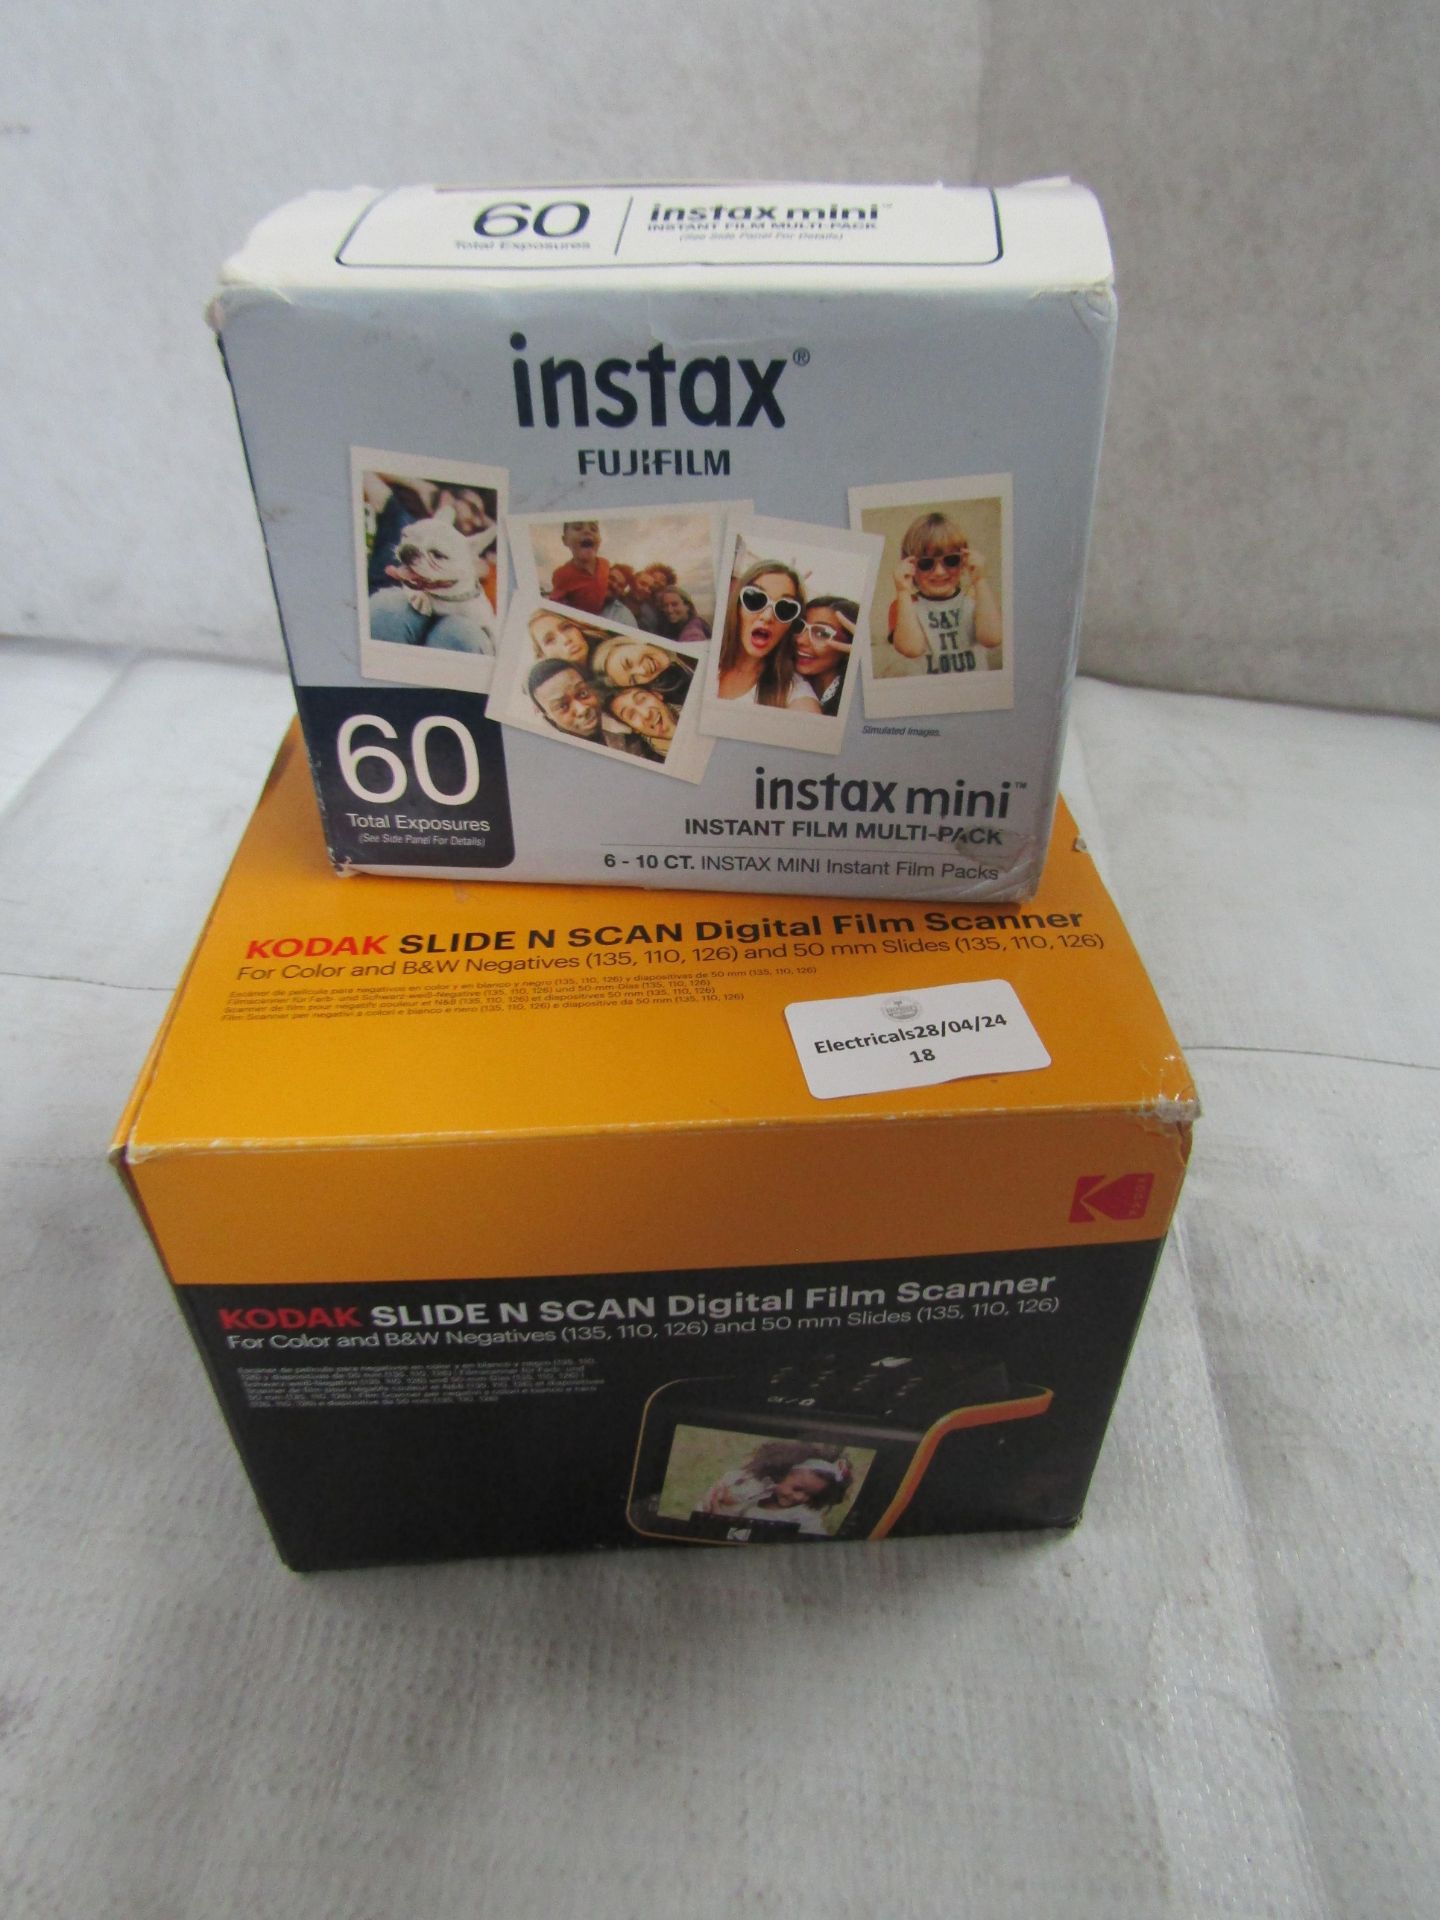 2x Items Being - 1x Kodak Slide N Scan Digital Film Scanner - 1x Instax Mini Instant Film Multi-Pack